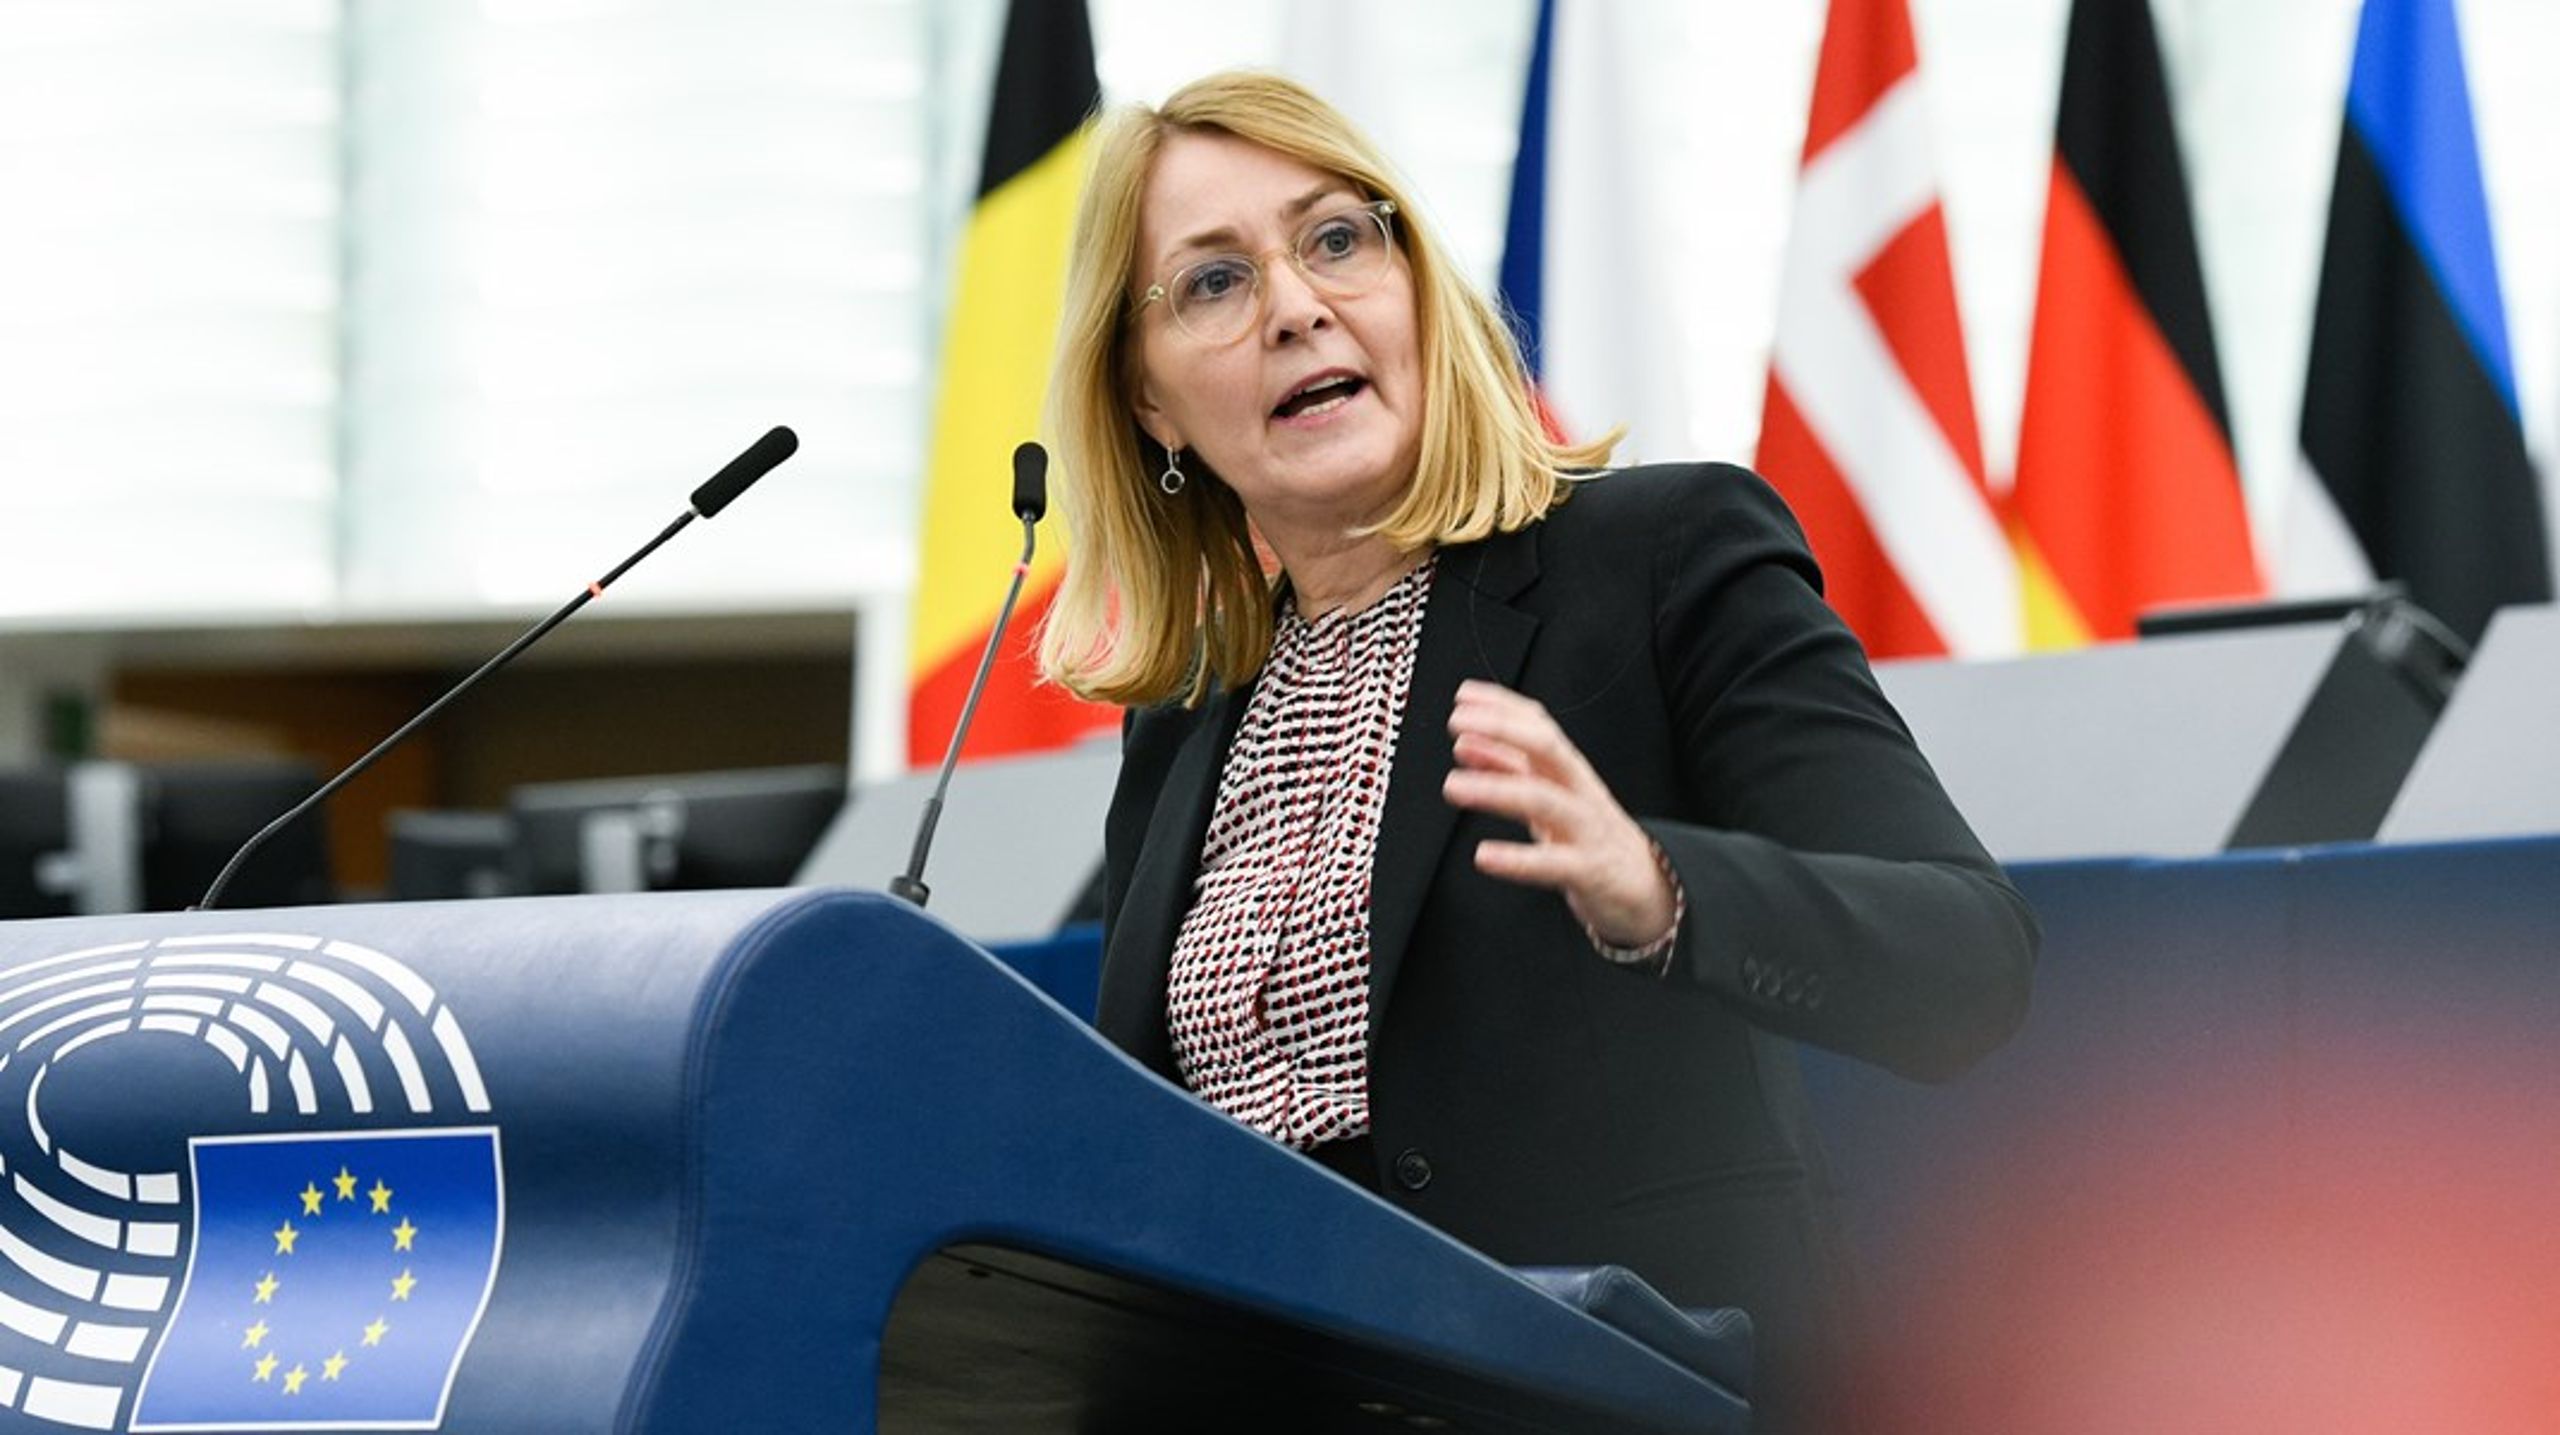 Christel Schaldemose har siddet over 17 år i Europa-Parlamentet for Socialdemokratiet. Hun er sit partis spidskandidat ved valget til Europa-Parlamentet søndag 9. juni.